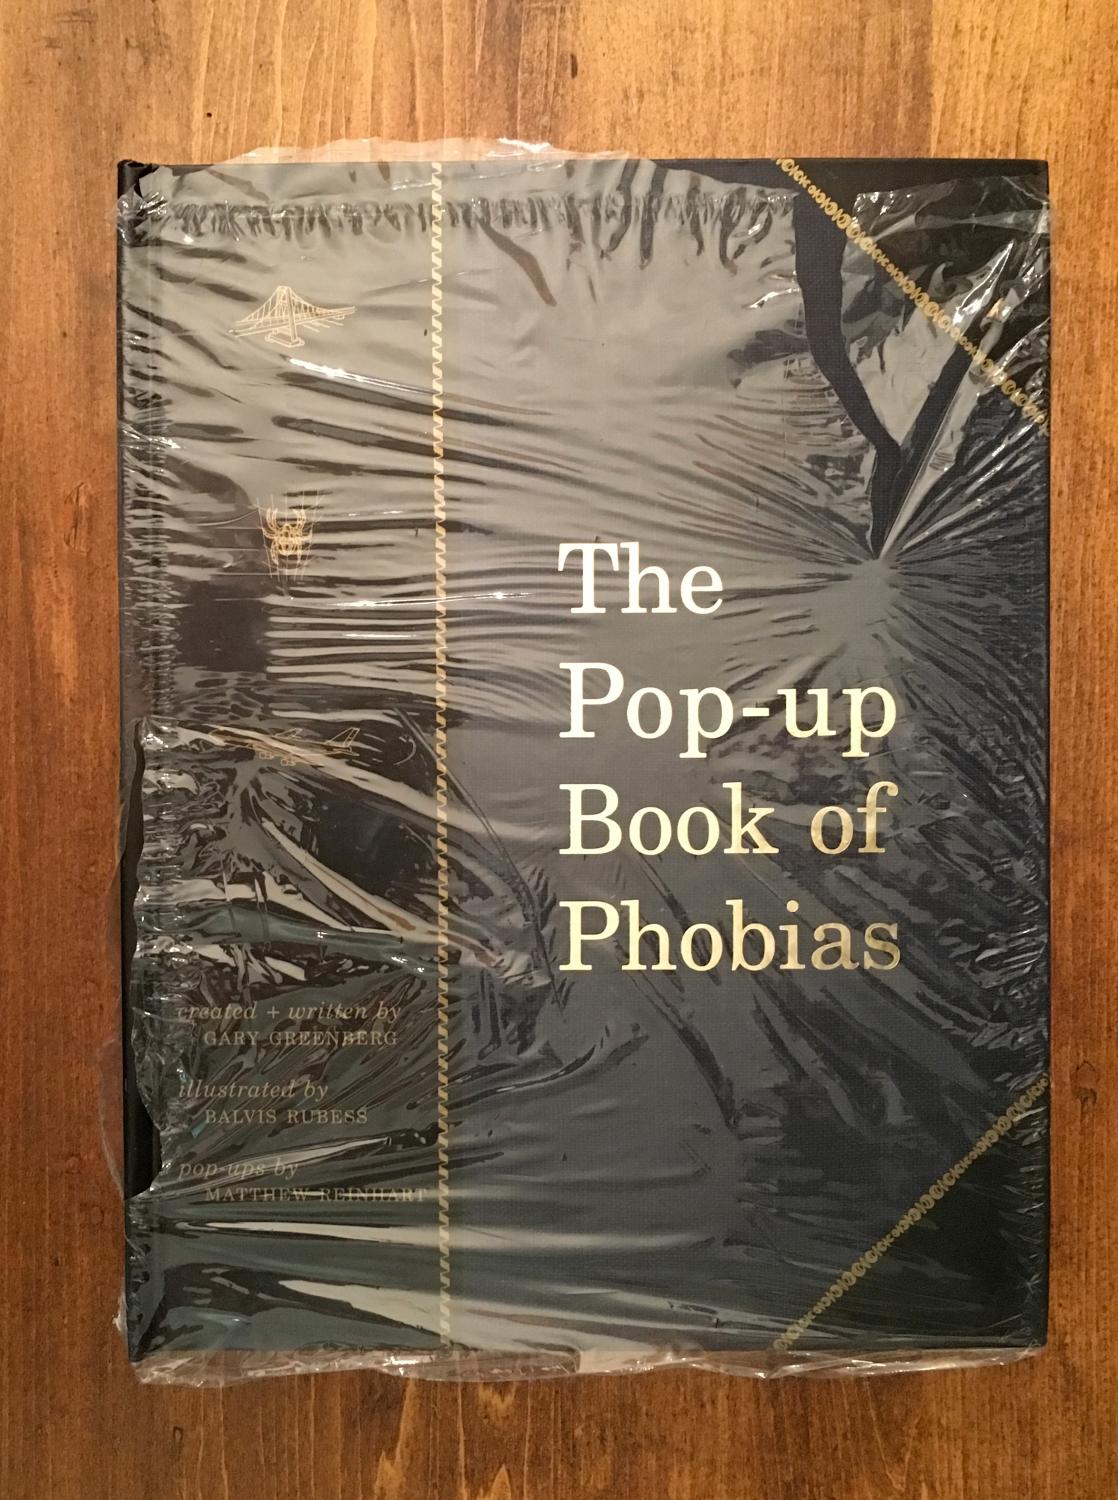 Jeg mistede min vej lastbil Profet The Pop-up Book of Phobias by Matthew Reinhart: Fine Hardcover (1999)  Signed by Illustrator(s) | JMHunt